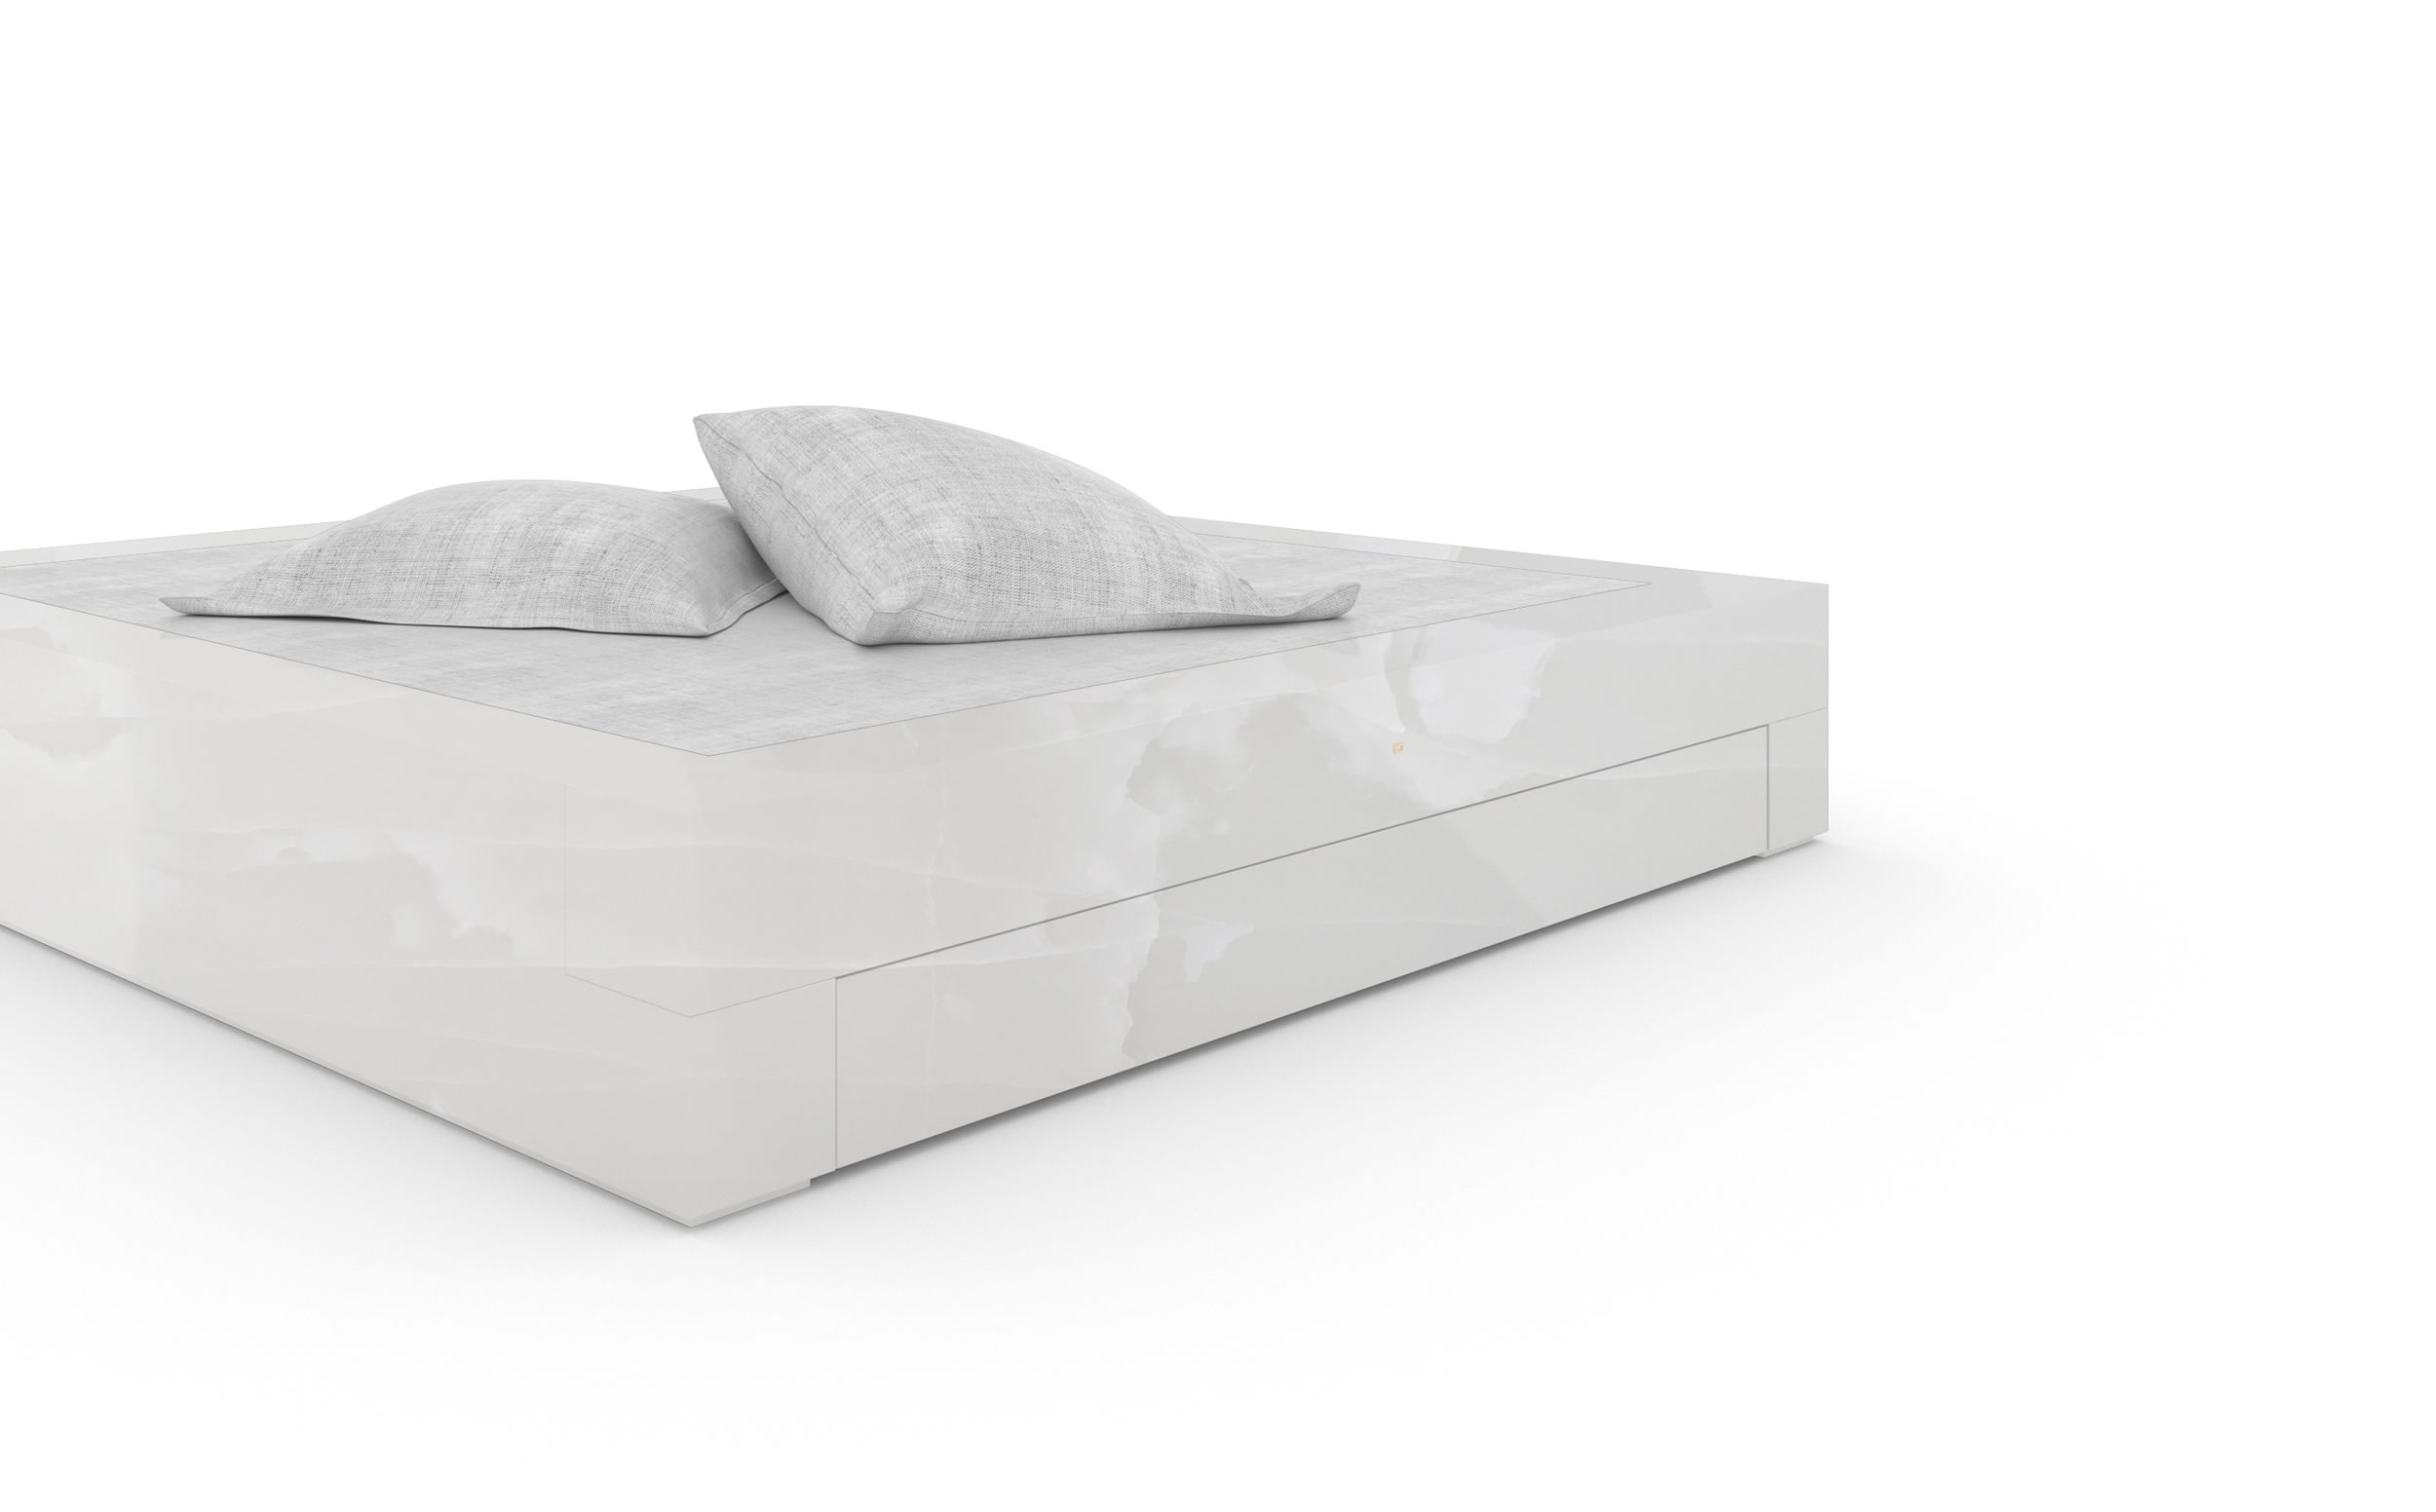 Design Bed Drawers Marble White Purist Exclusive Handcrafted Luxury InteriorFELIX SCHWAKE